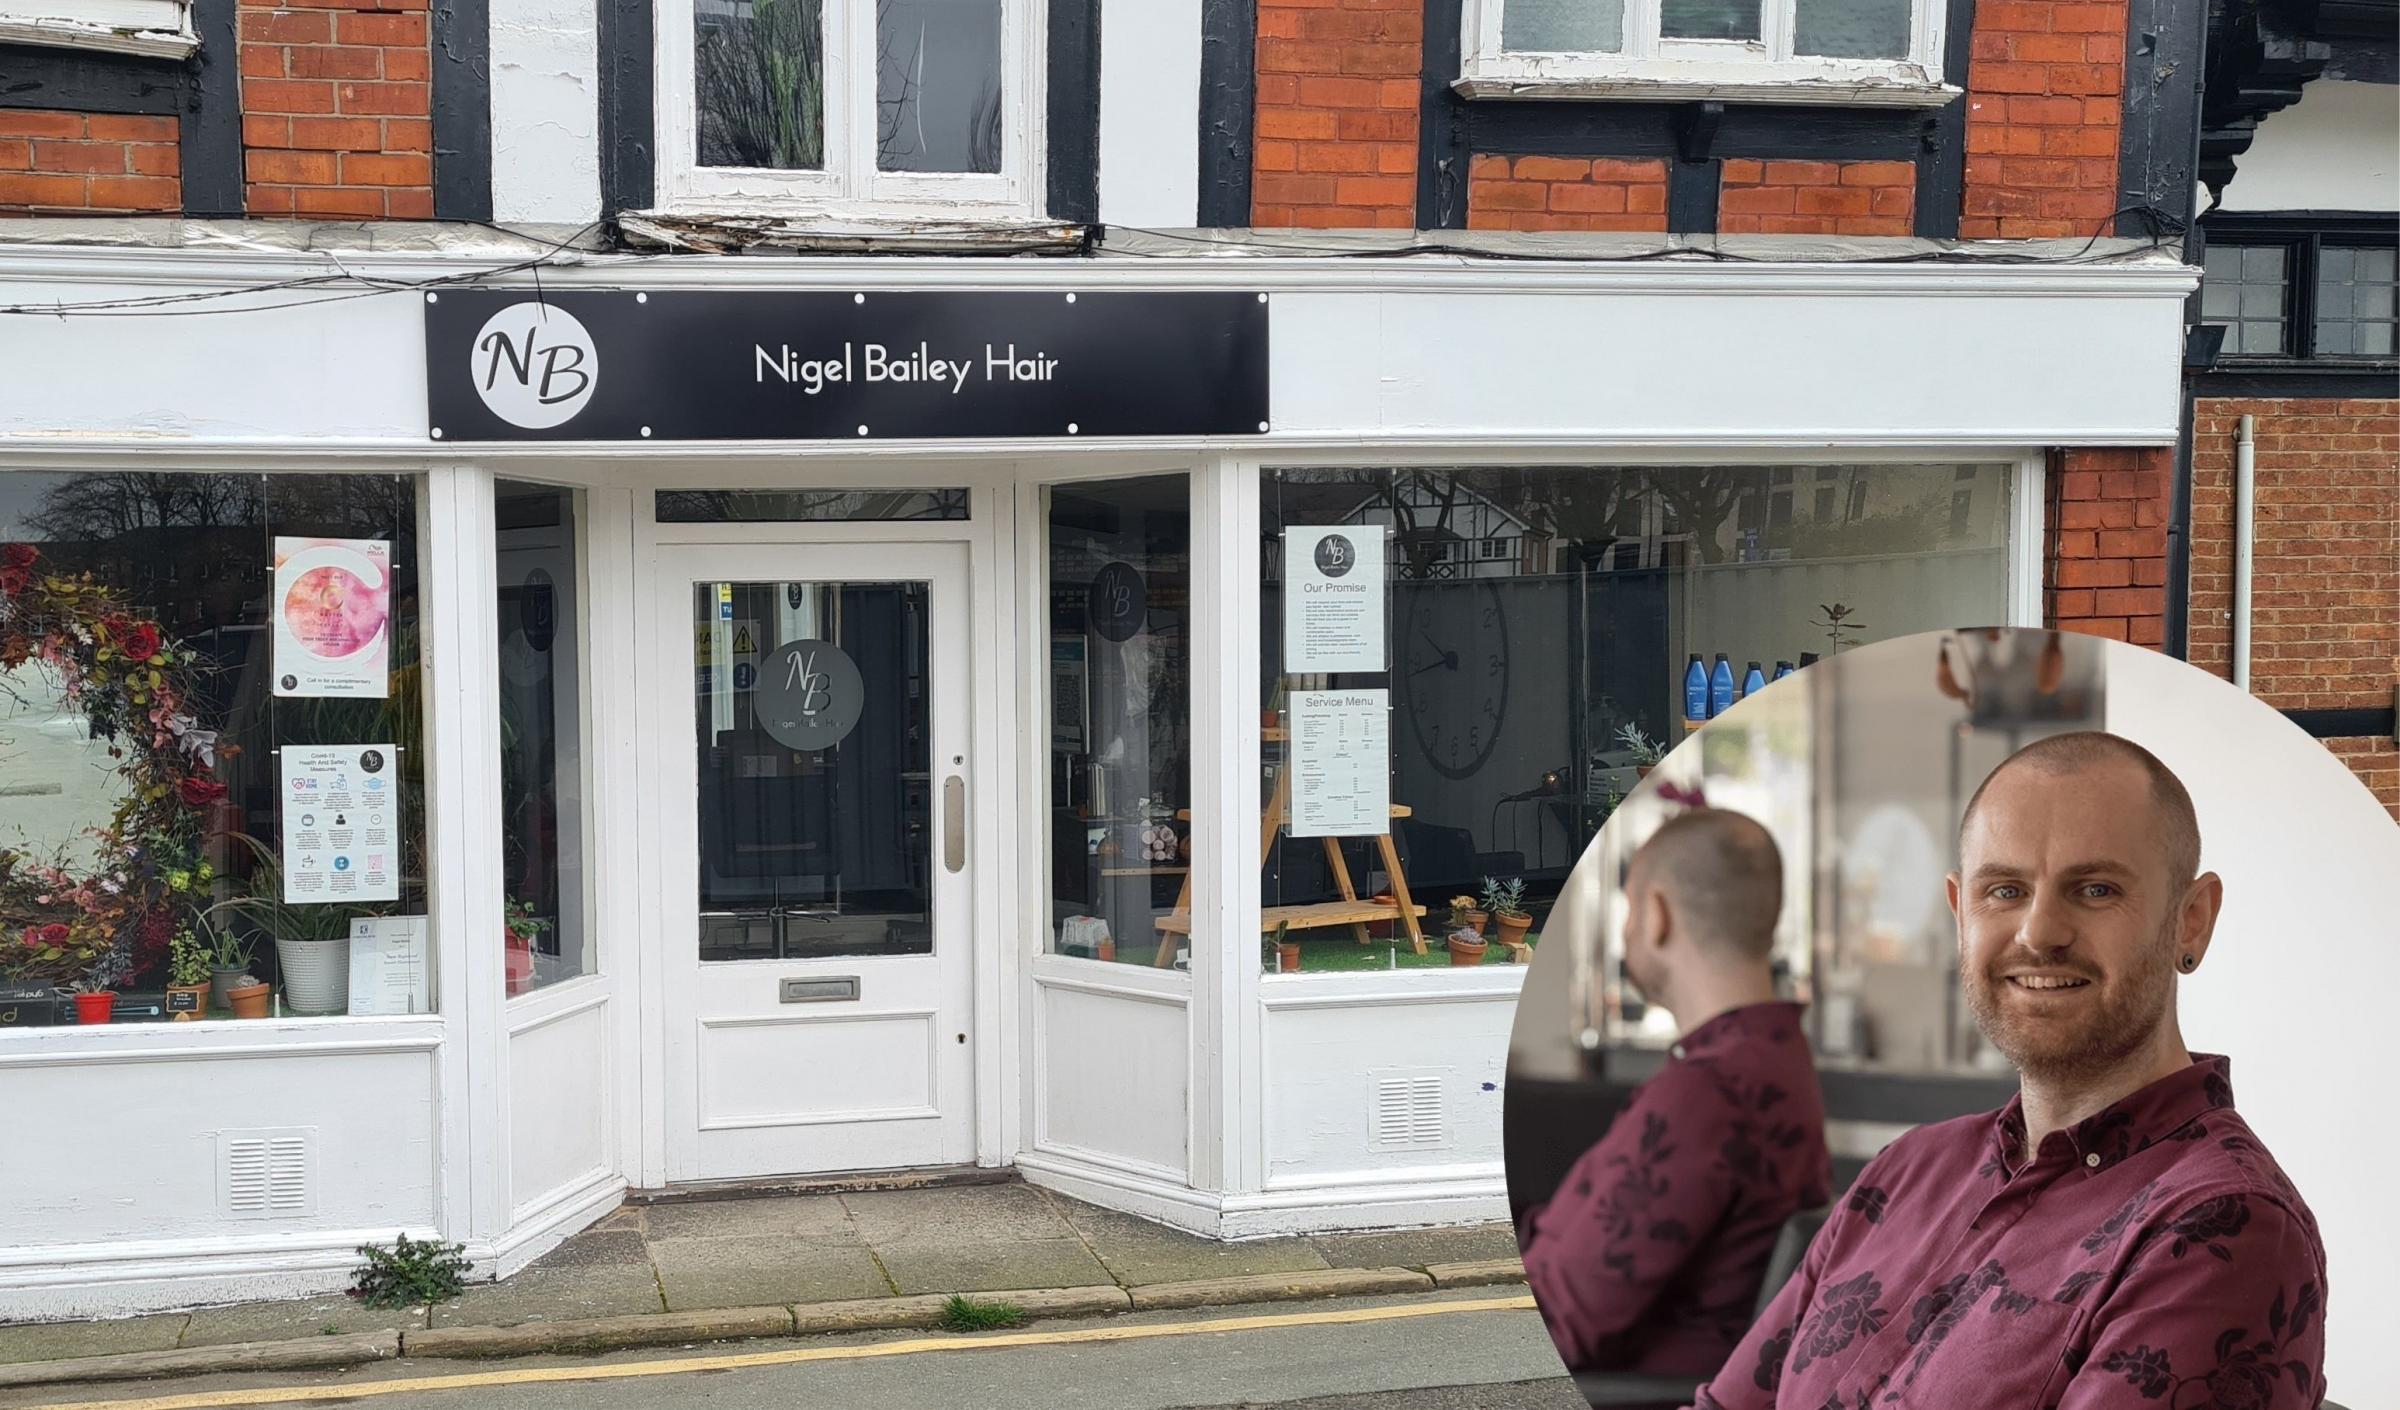 Nigel Bailey Hair in Northwich and insert, salon owner Nigel Bailey